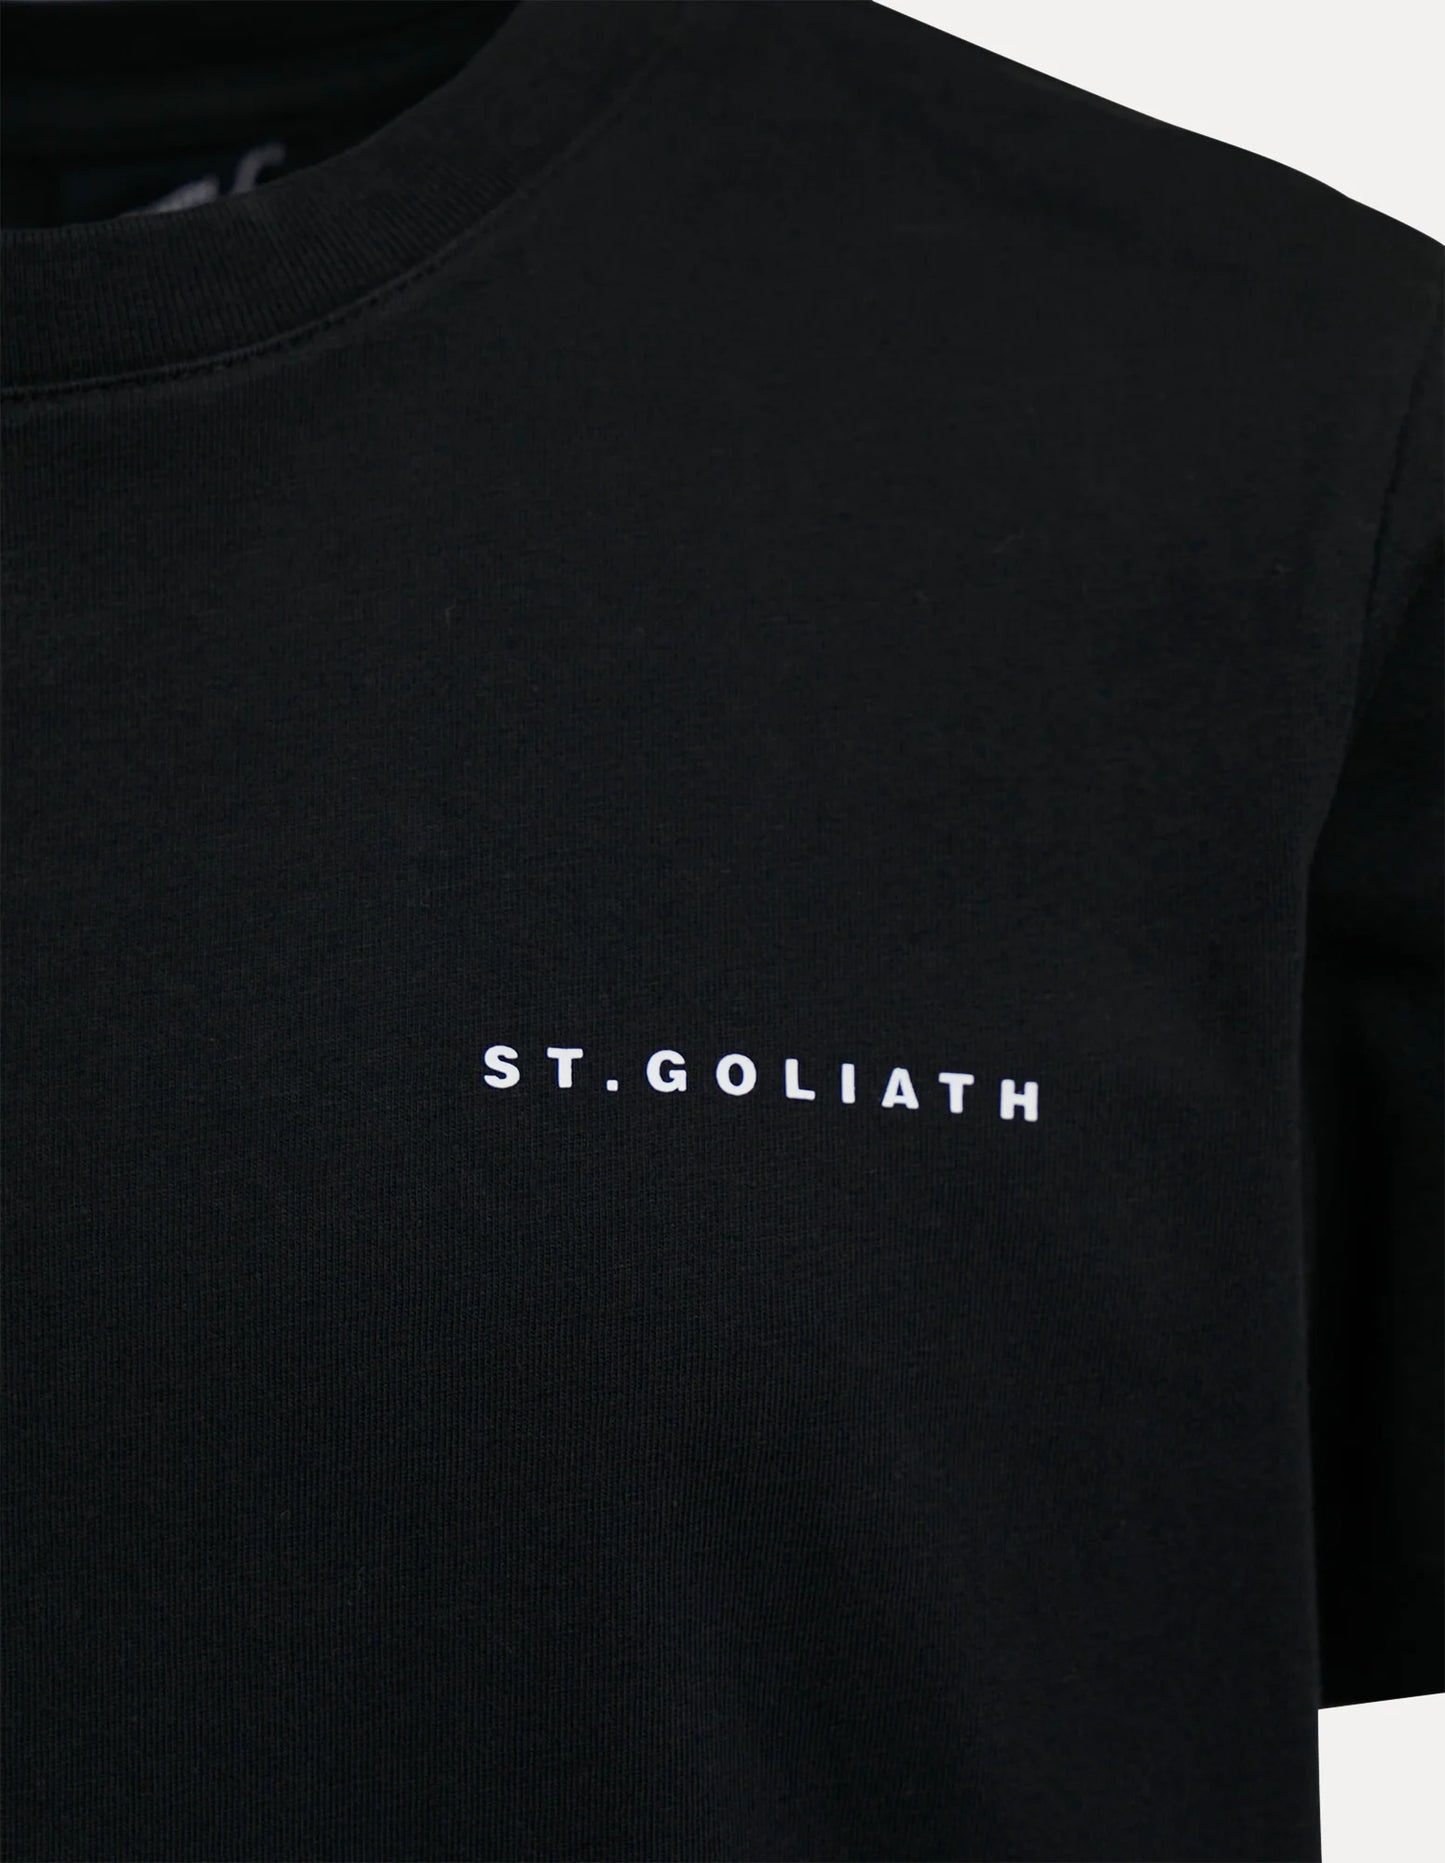 ST GOLIATH Logo Youth Tee - Black